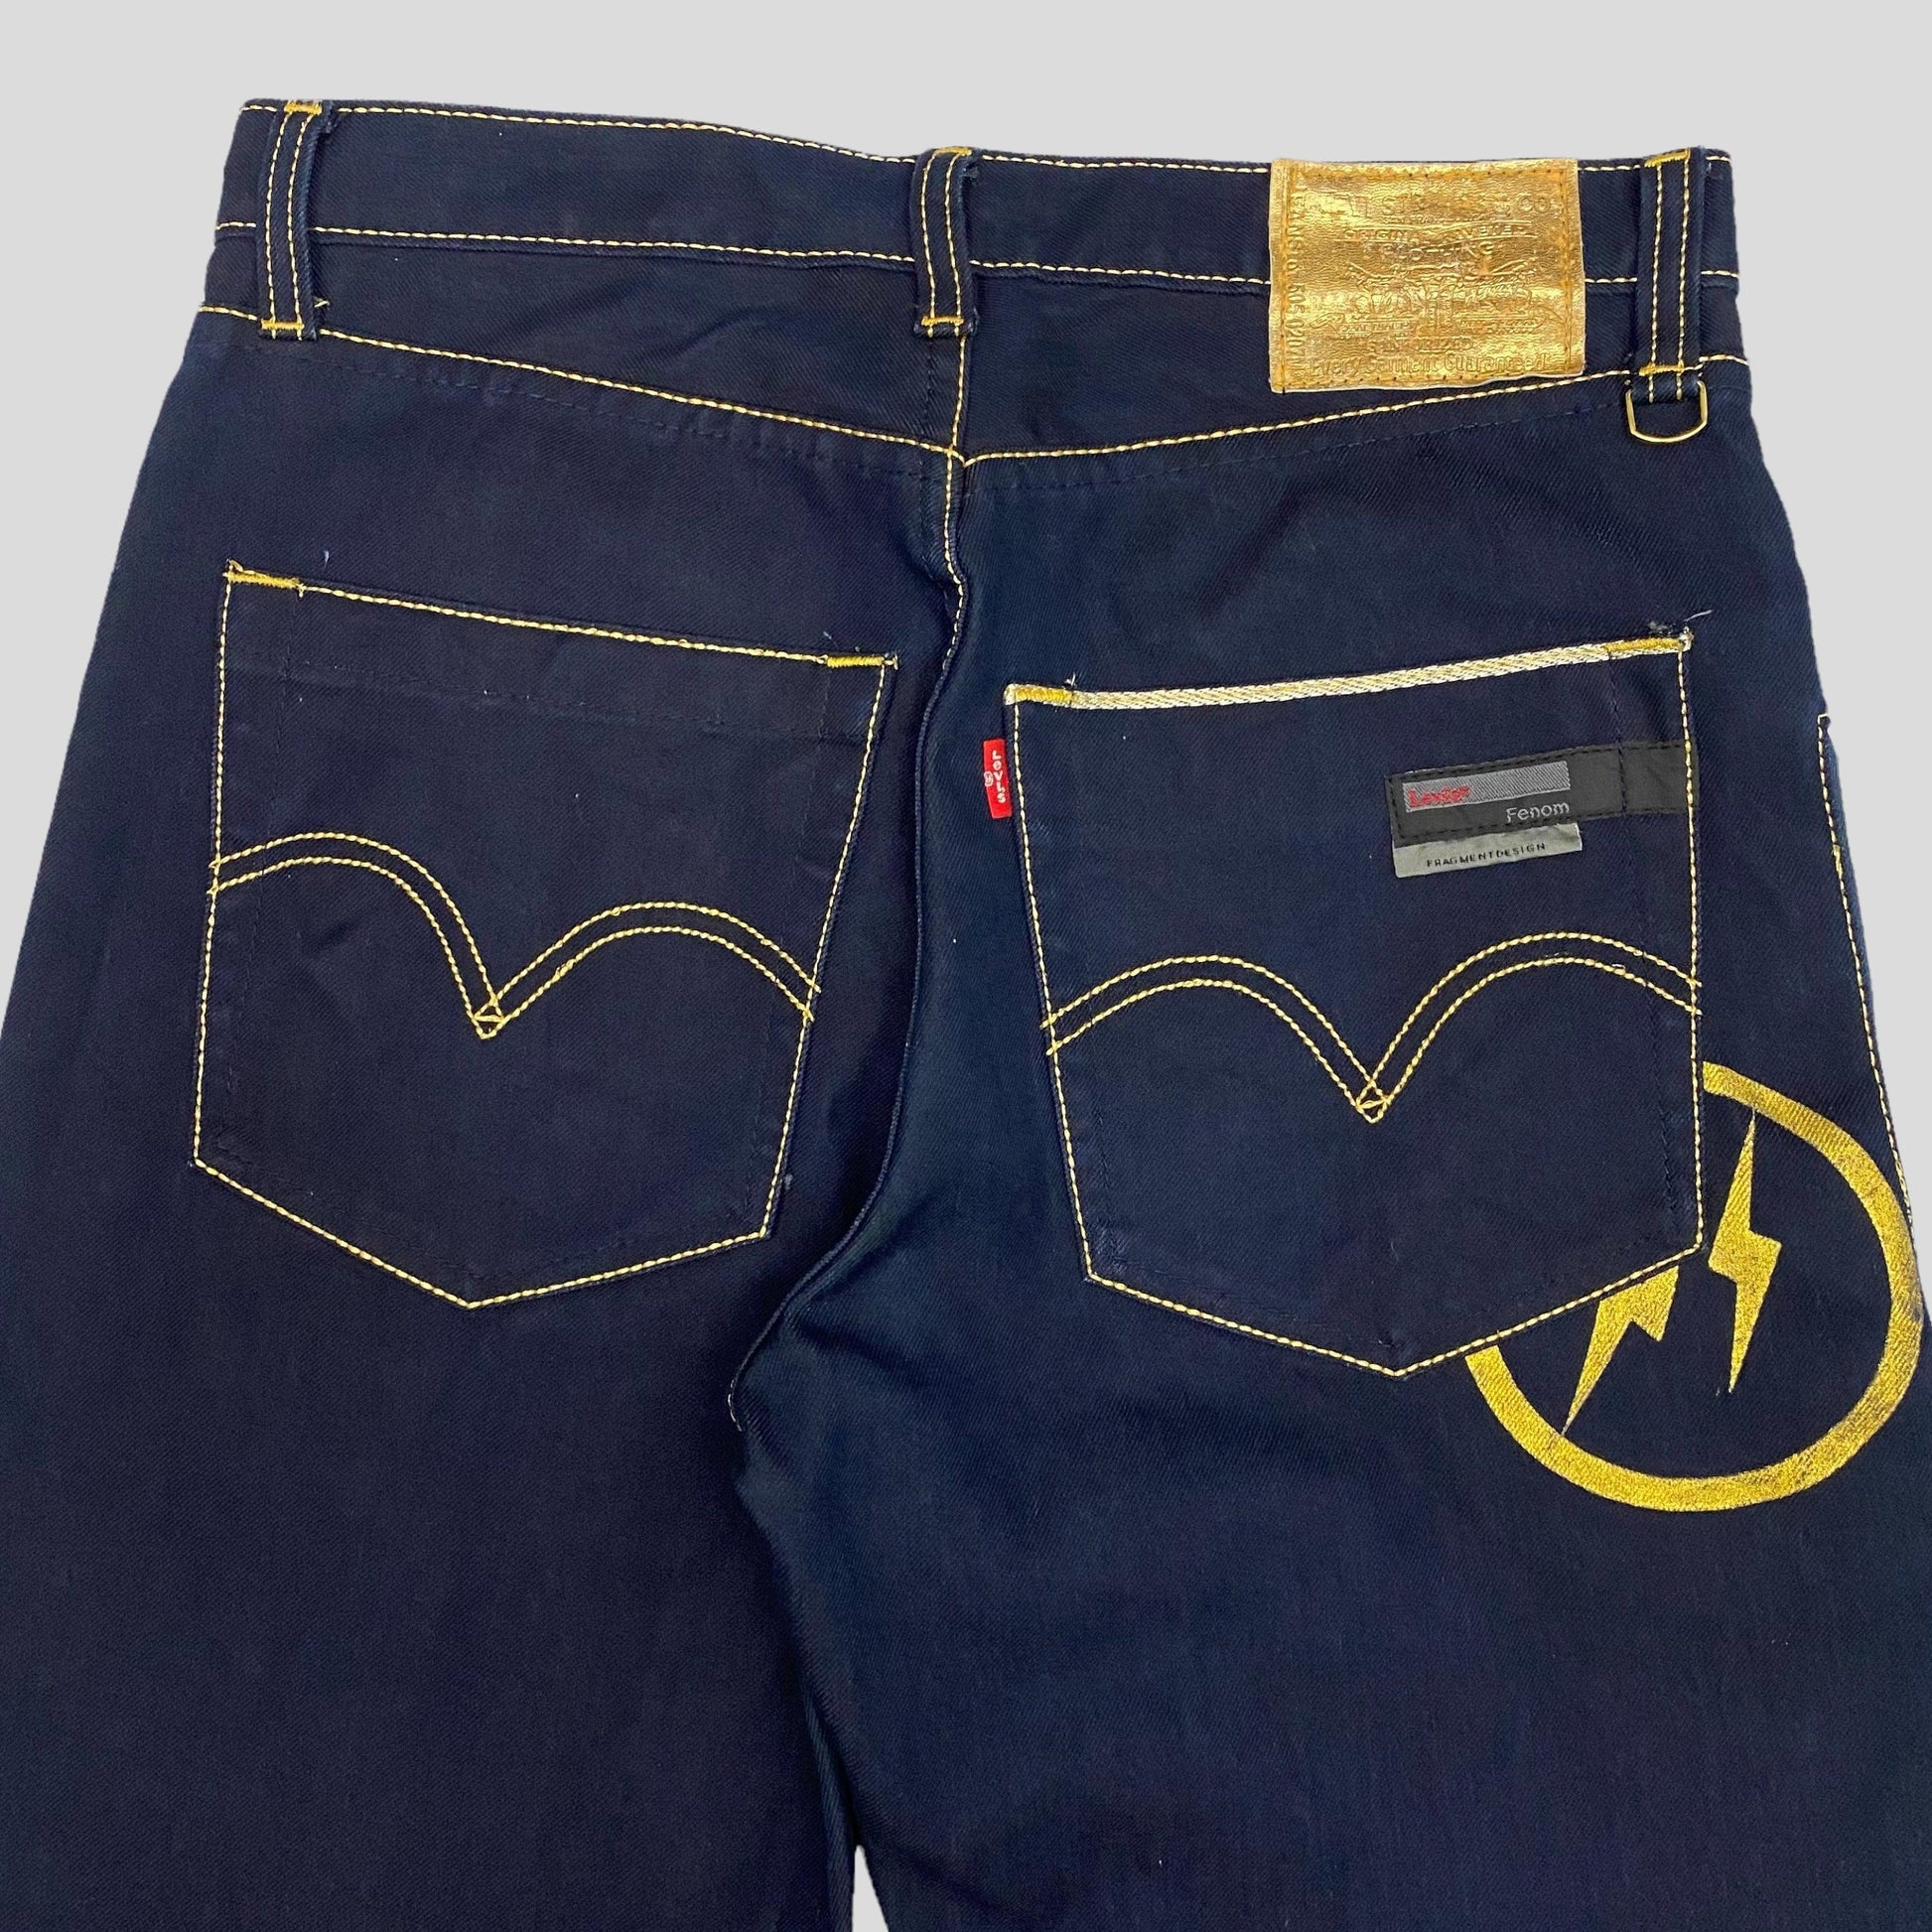 Levi’s x Fragment Fenom Selvedge Denim Jeans - W32 - Known Source